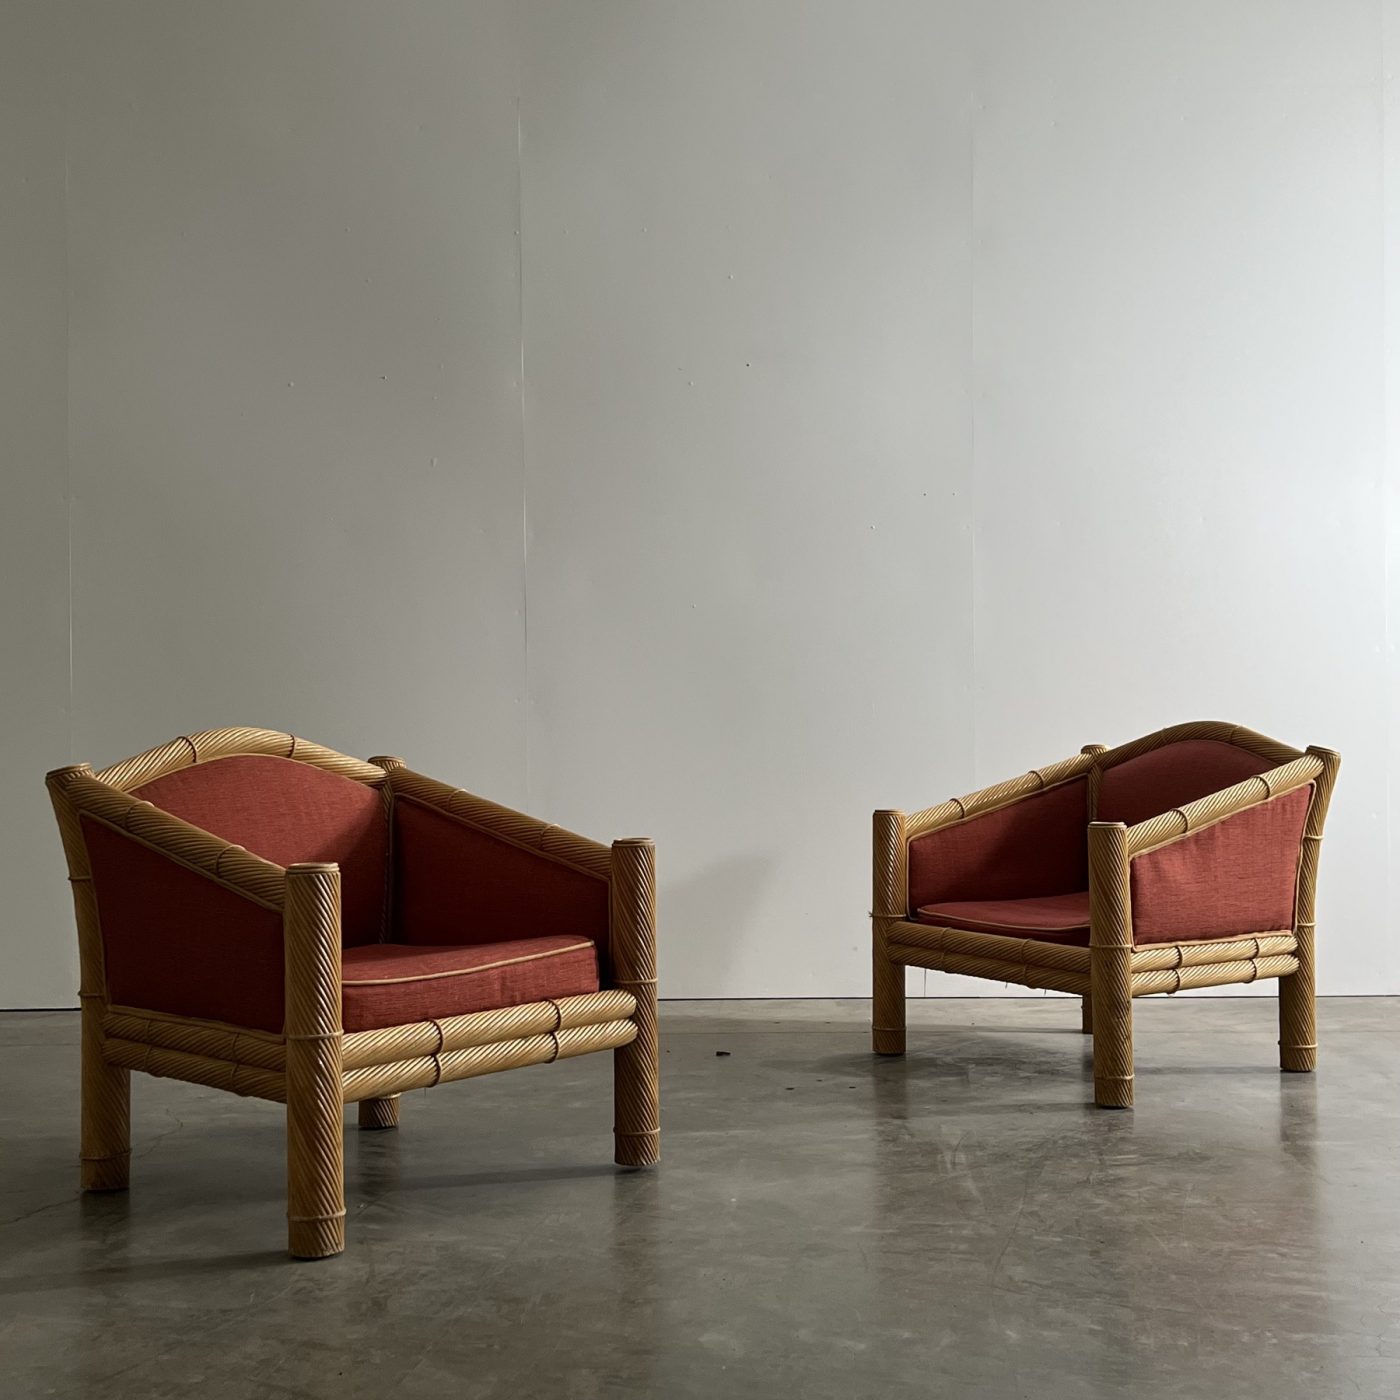 objet-vagabond-rattan-armchairs0002